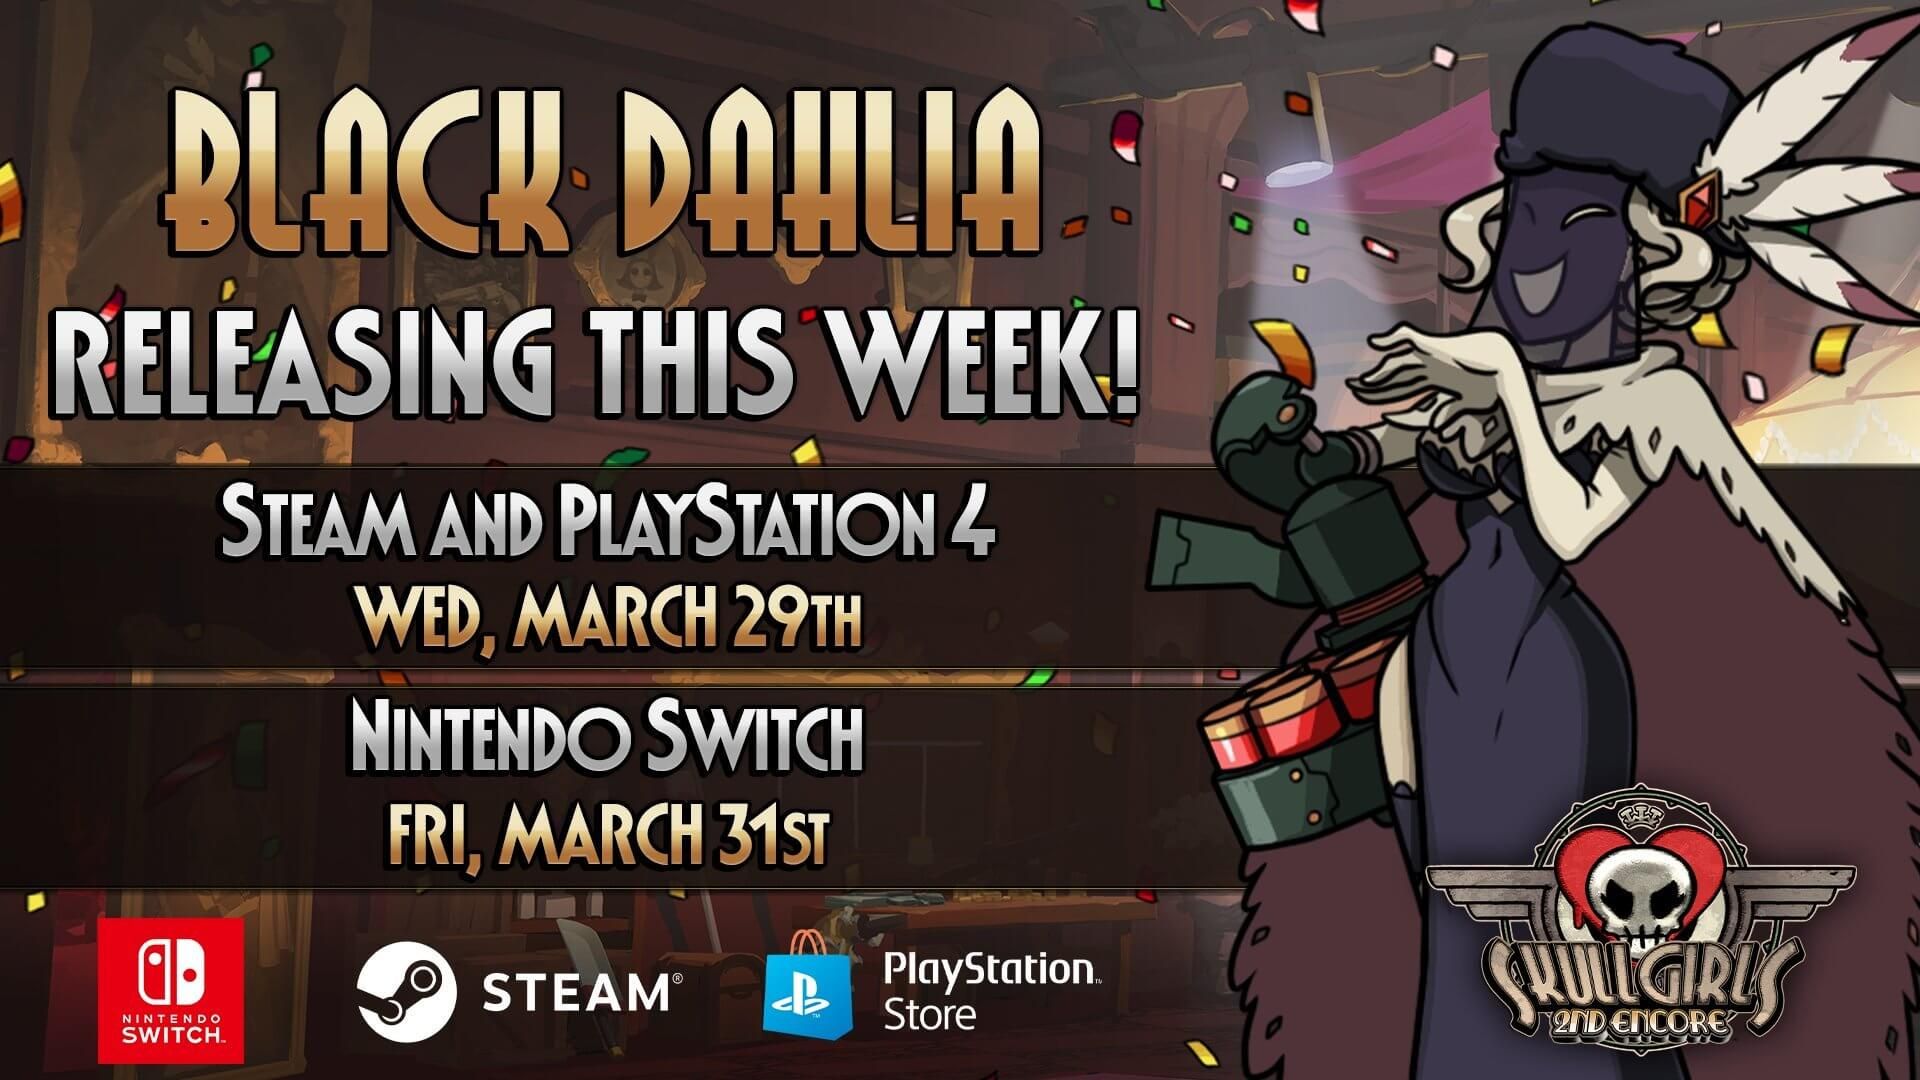 Skullgirls 2nd Encore DLC Character Black Dahlia Launches This Week